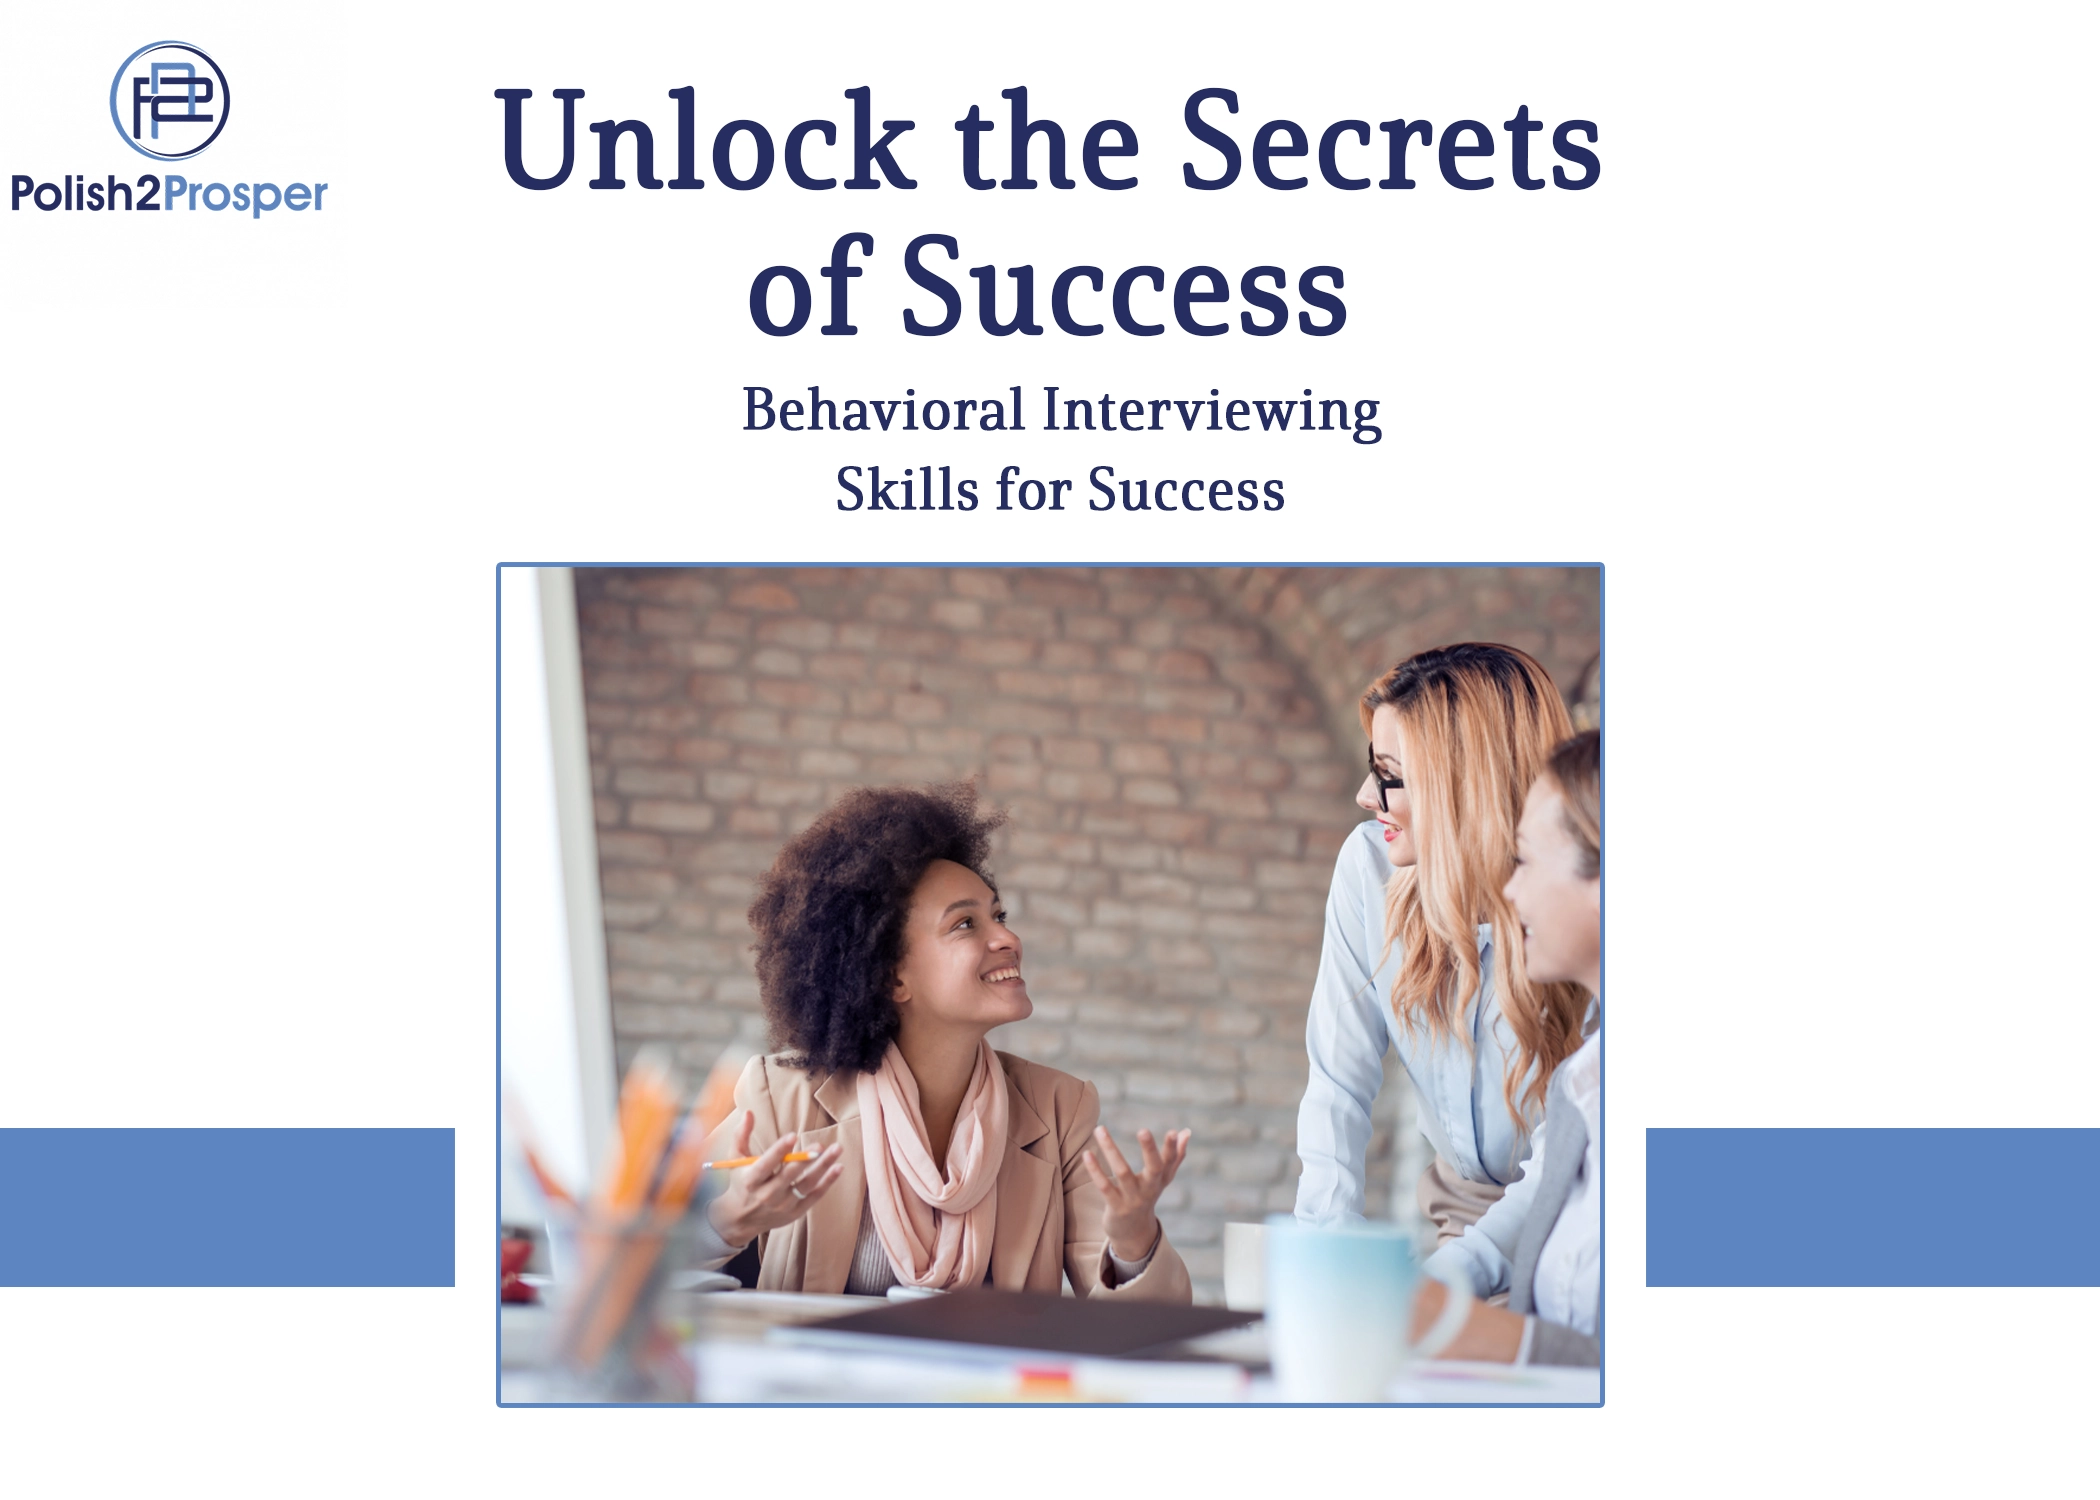 P2P ProductImage Template Unlock the Secrets of Success